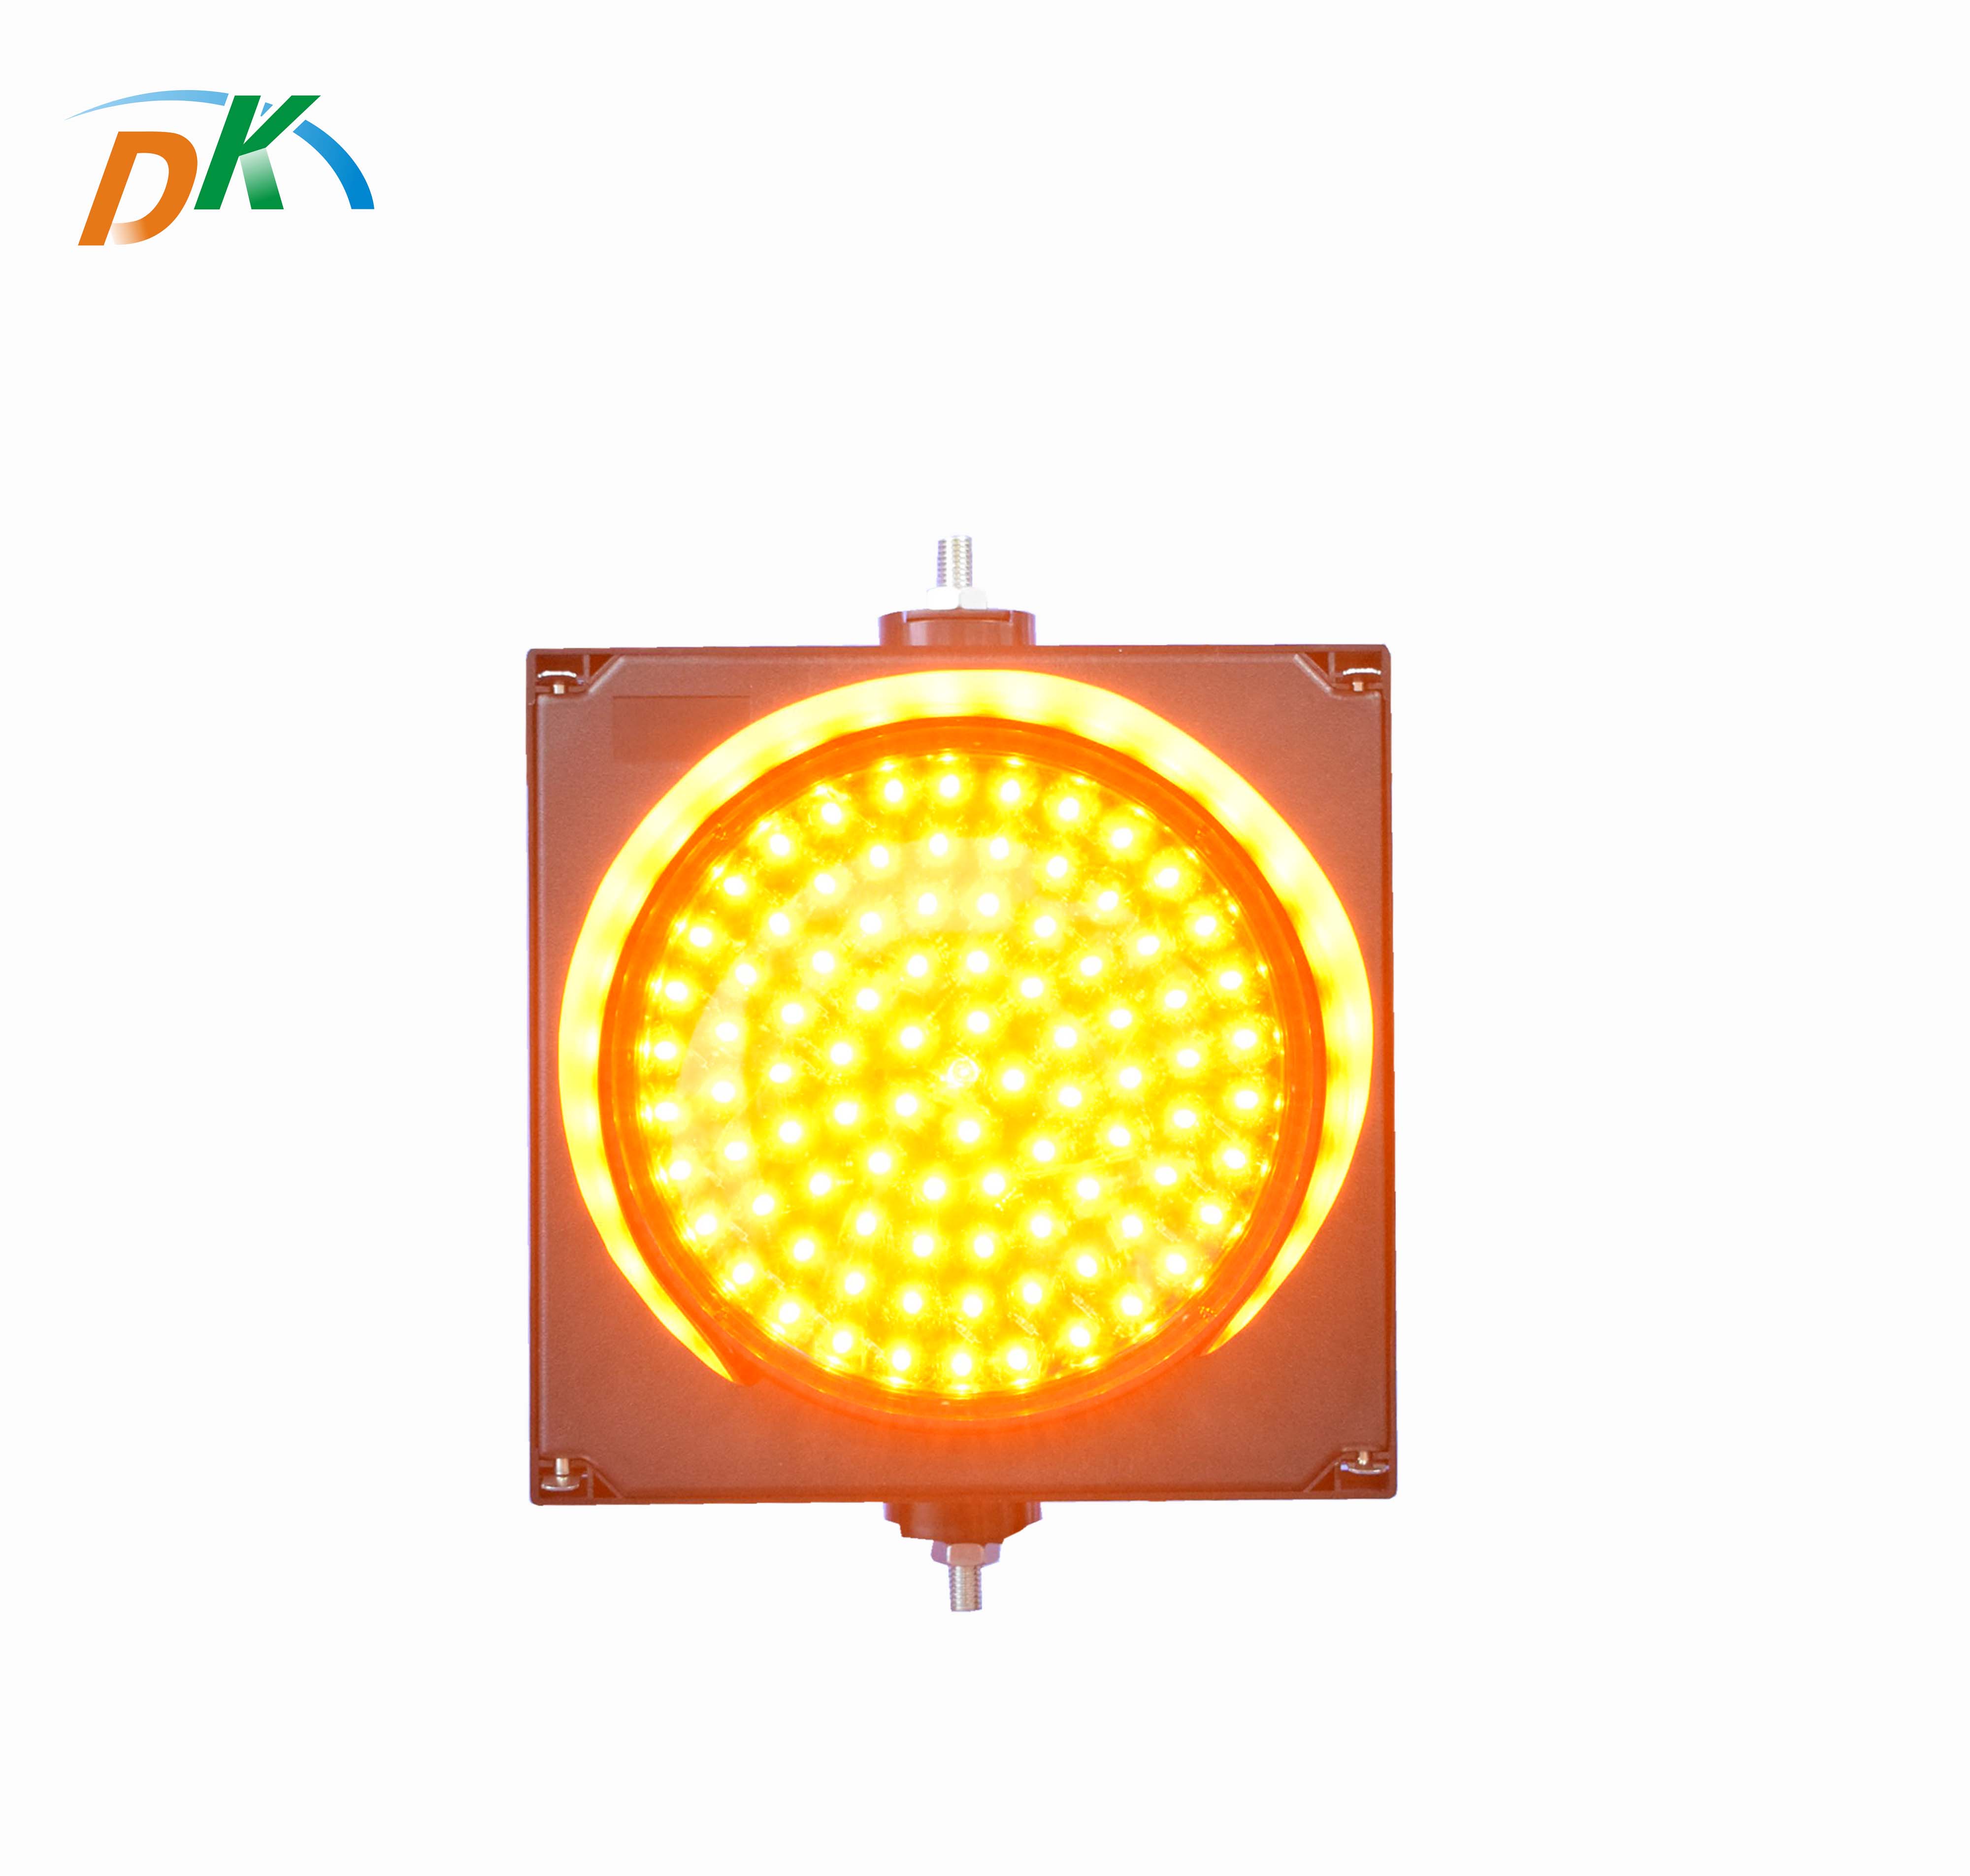 DK LED Traffic high brightness 200MM LED Flashing Warning Signal Light